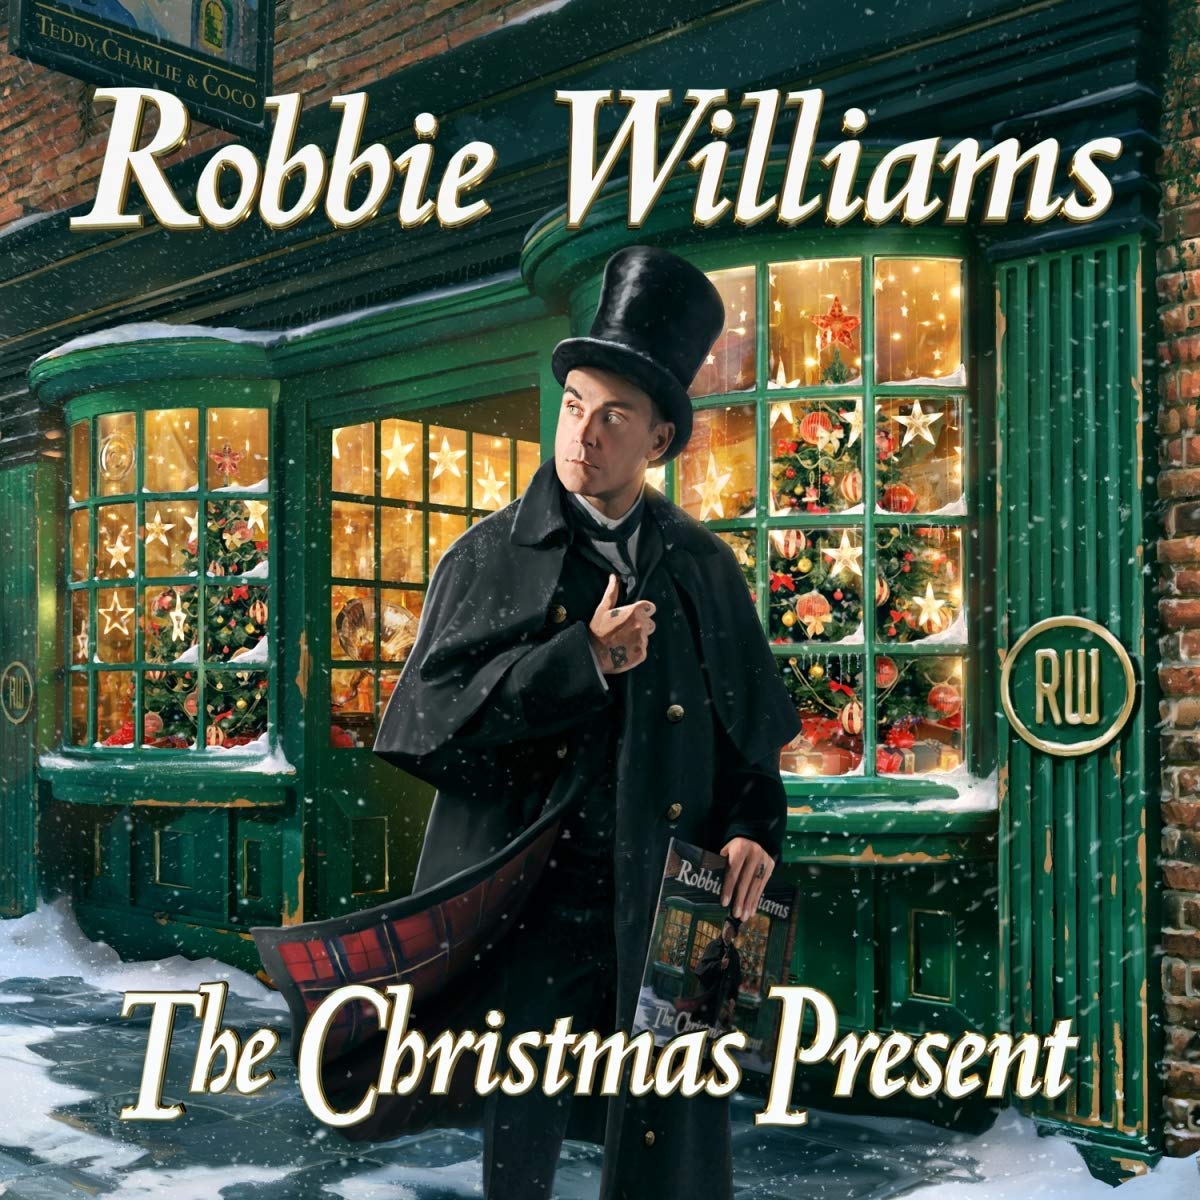 Robbie Williams The Christmas Present album 2019 cover – M&B Music Blog